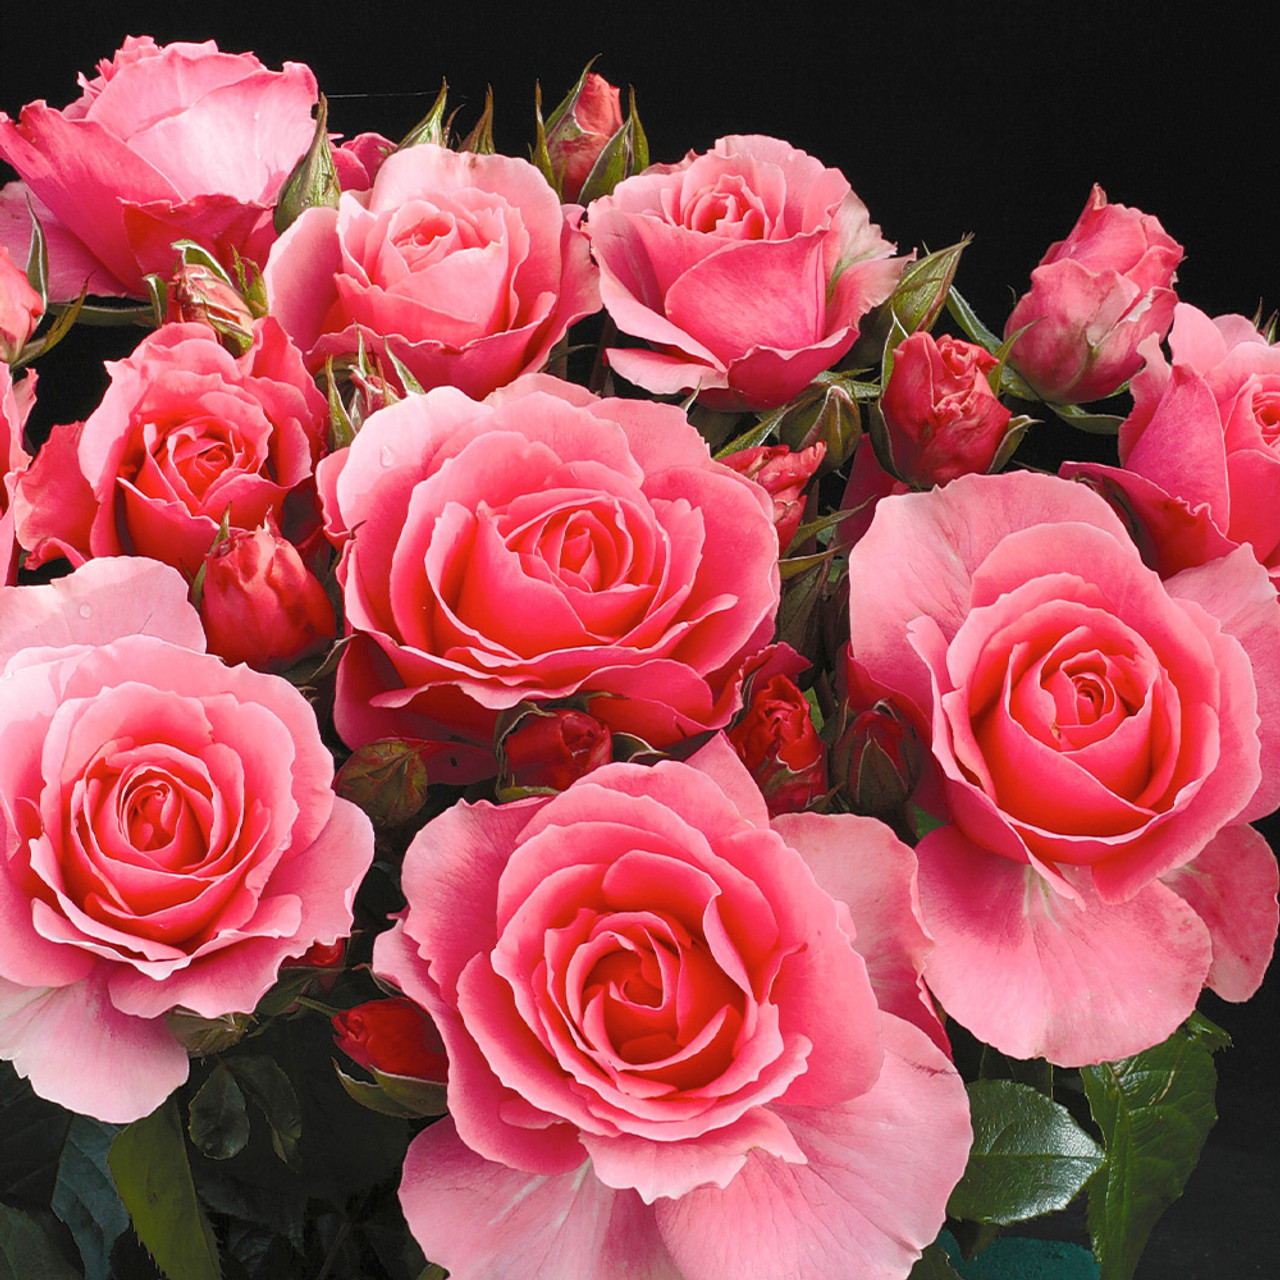 Rose You're Beautiful (ROY 2013)